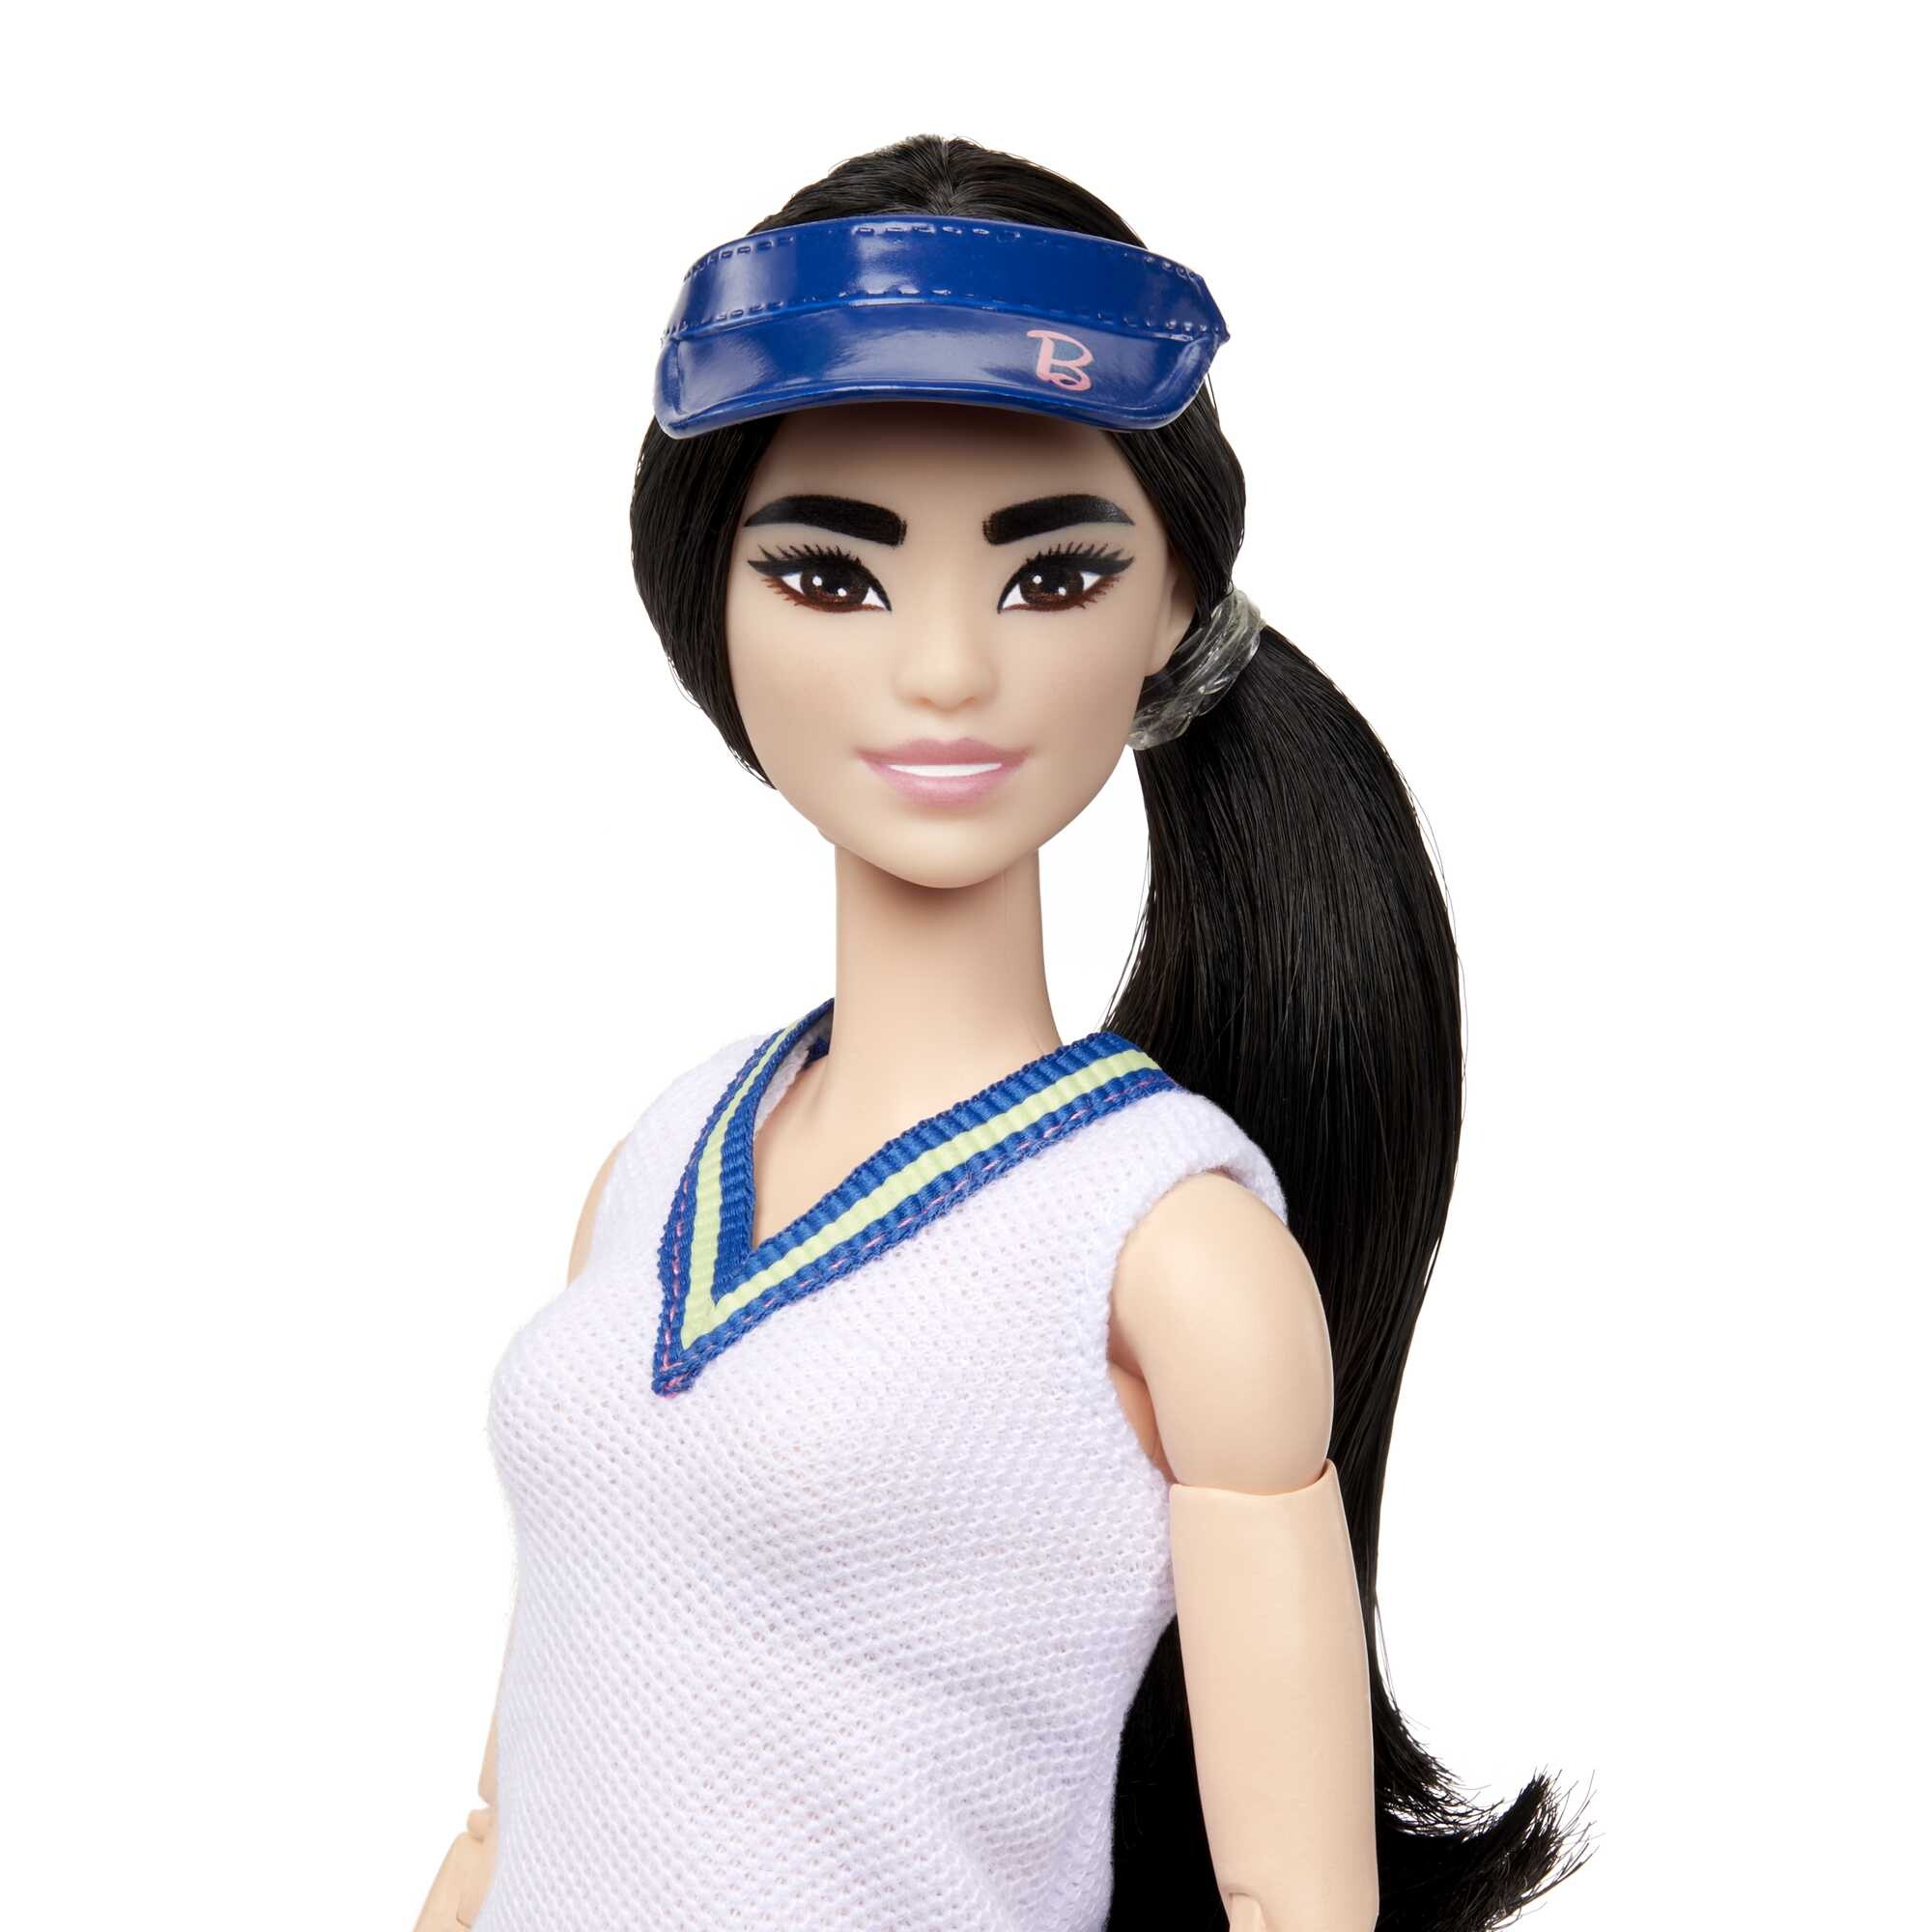 Barbie carriere - barbie tennista, bambola sportiva snodata con racchetta e accessori inclusi - Barbie